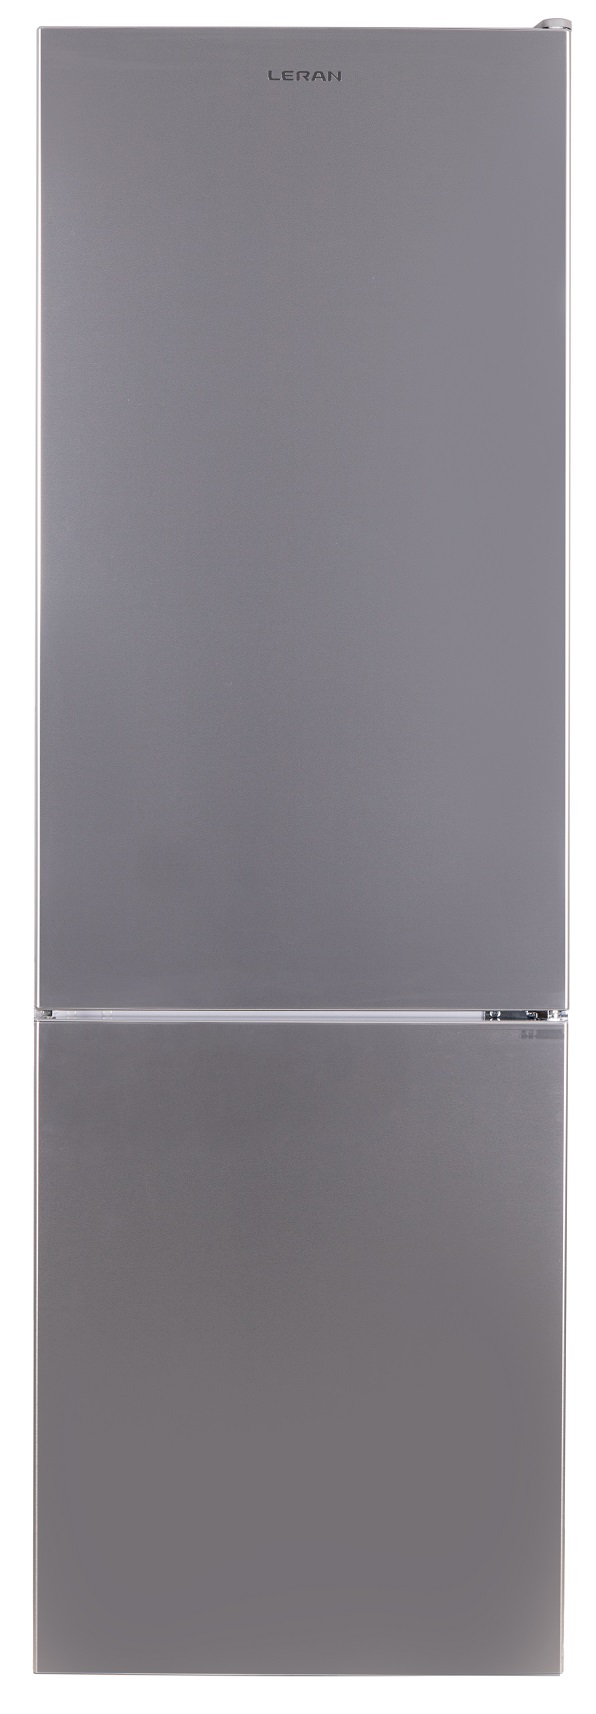 Холодильник Leran Brf 185 Ix Nf, цвет серебристый 529622 - фото 1